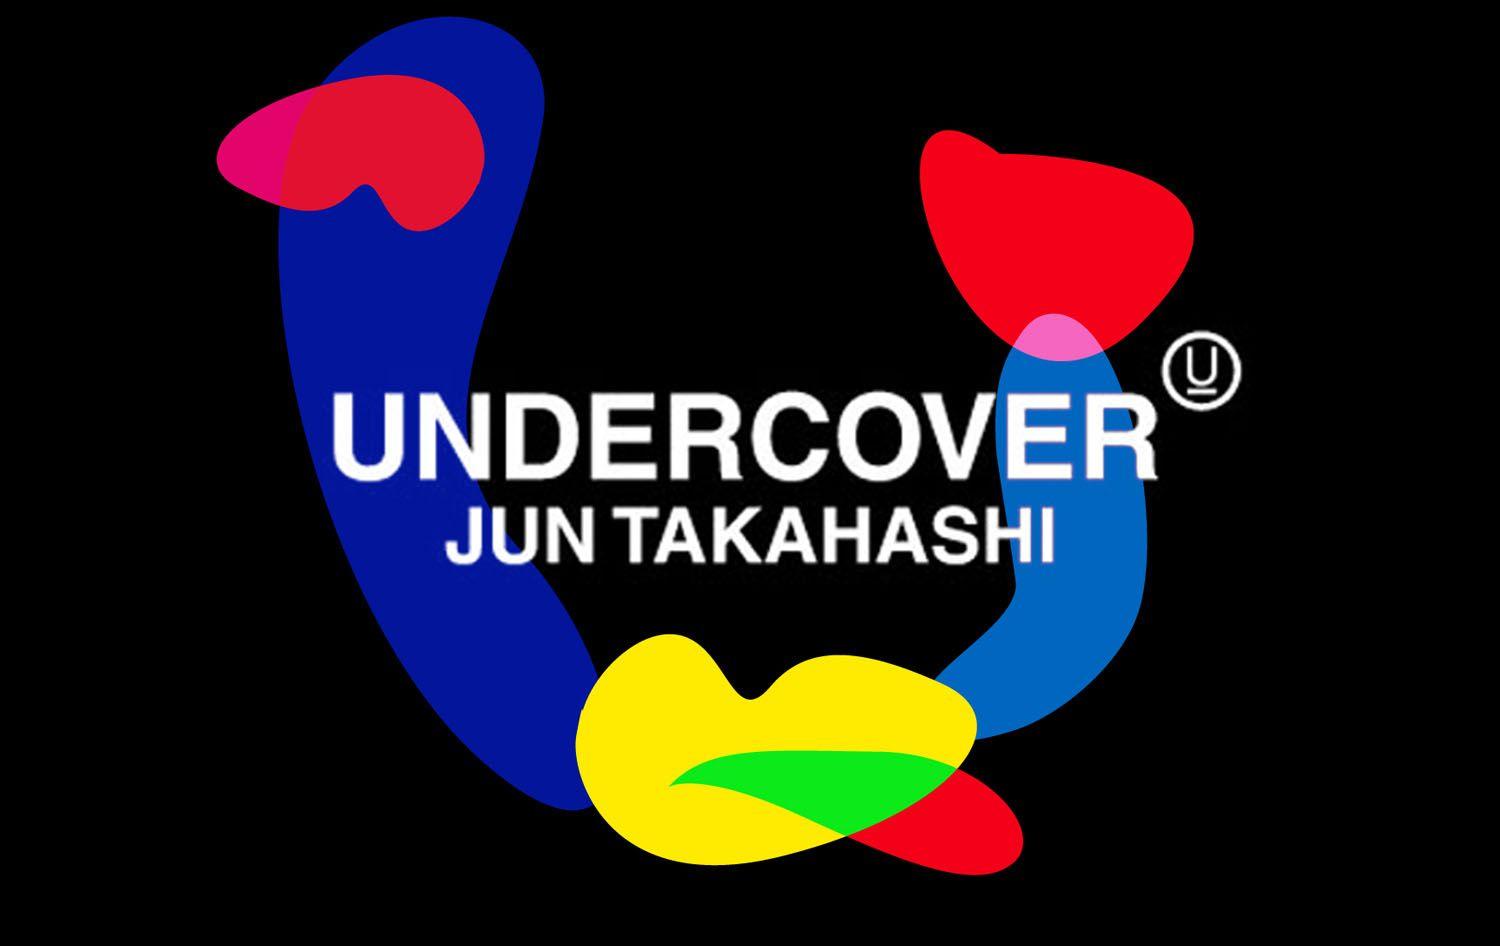 Jun Takahashi Undercover Logo - UNDERCOVER Jun Takahashi（アンダーカバー）